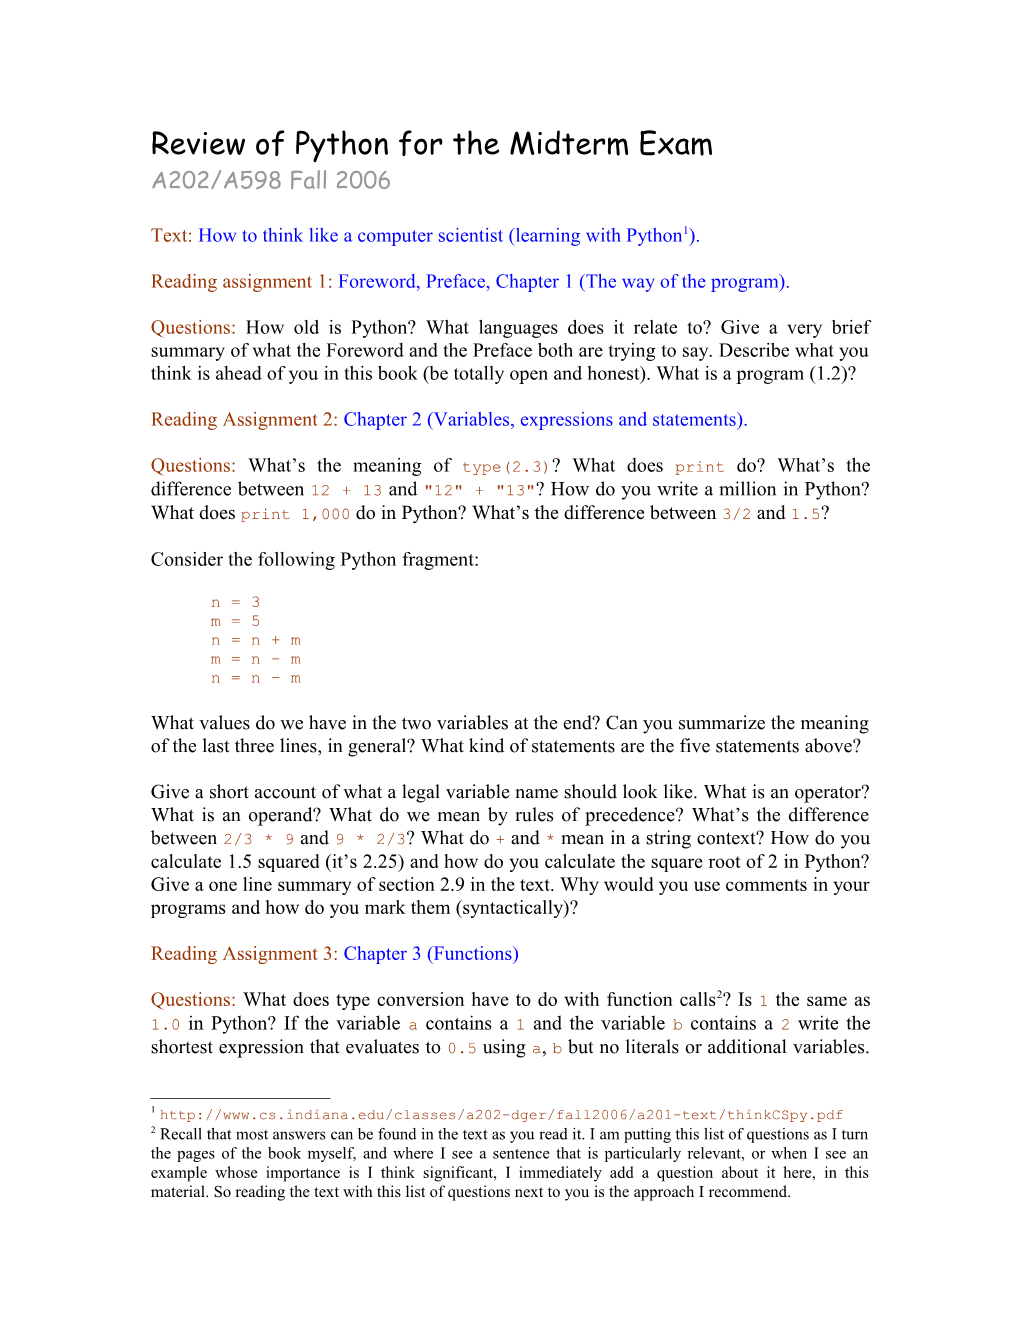 Review of Python for the Midterm Exam A202/A598 Fall 2006